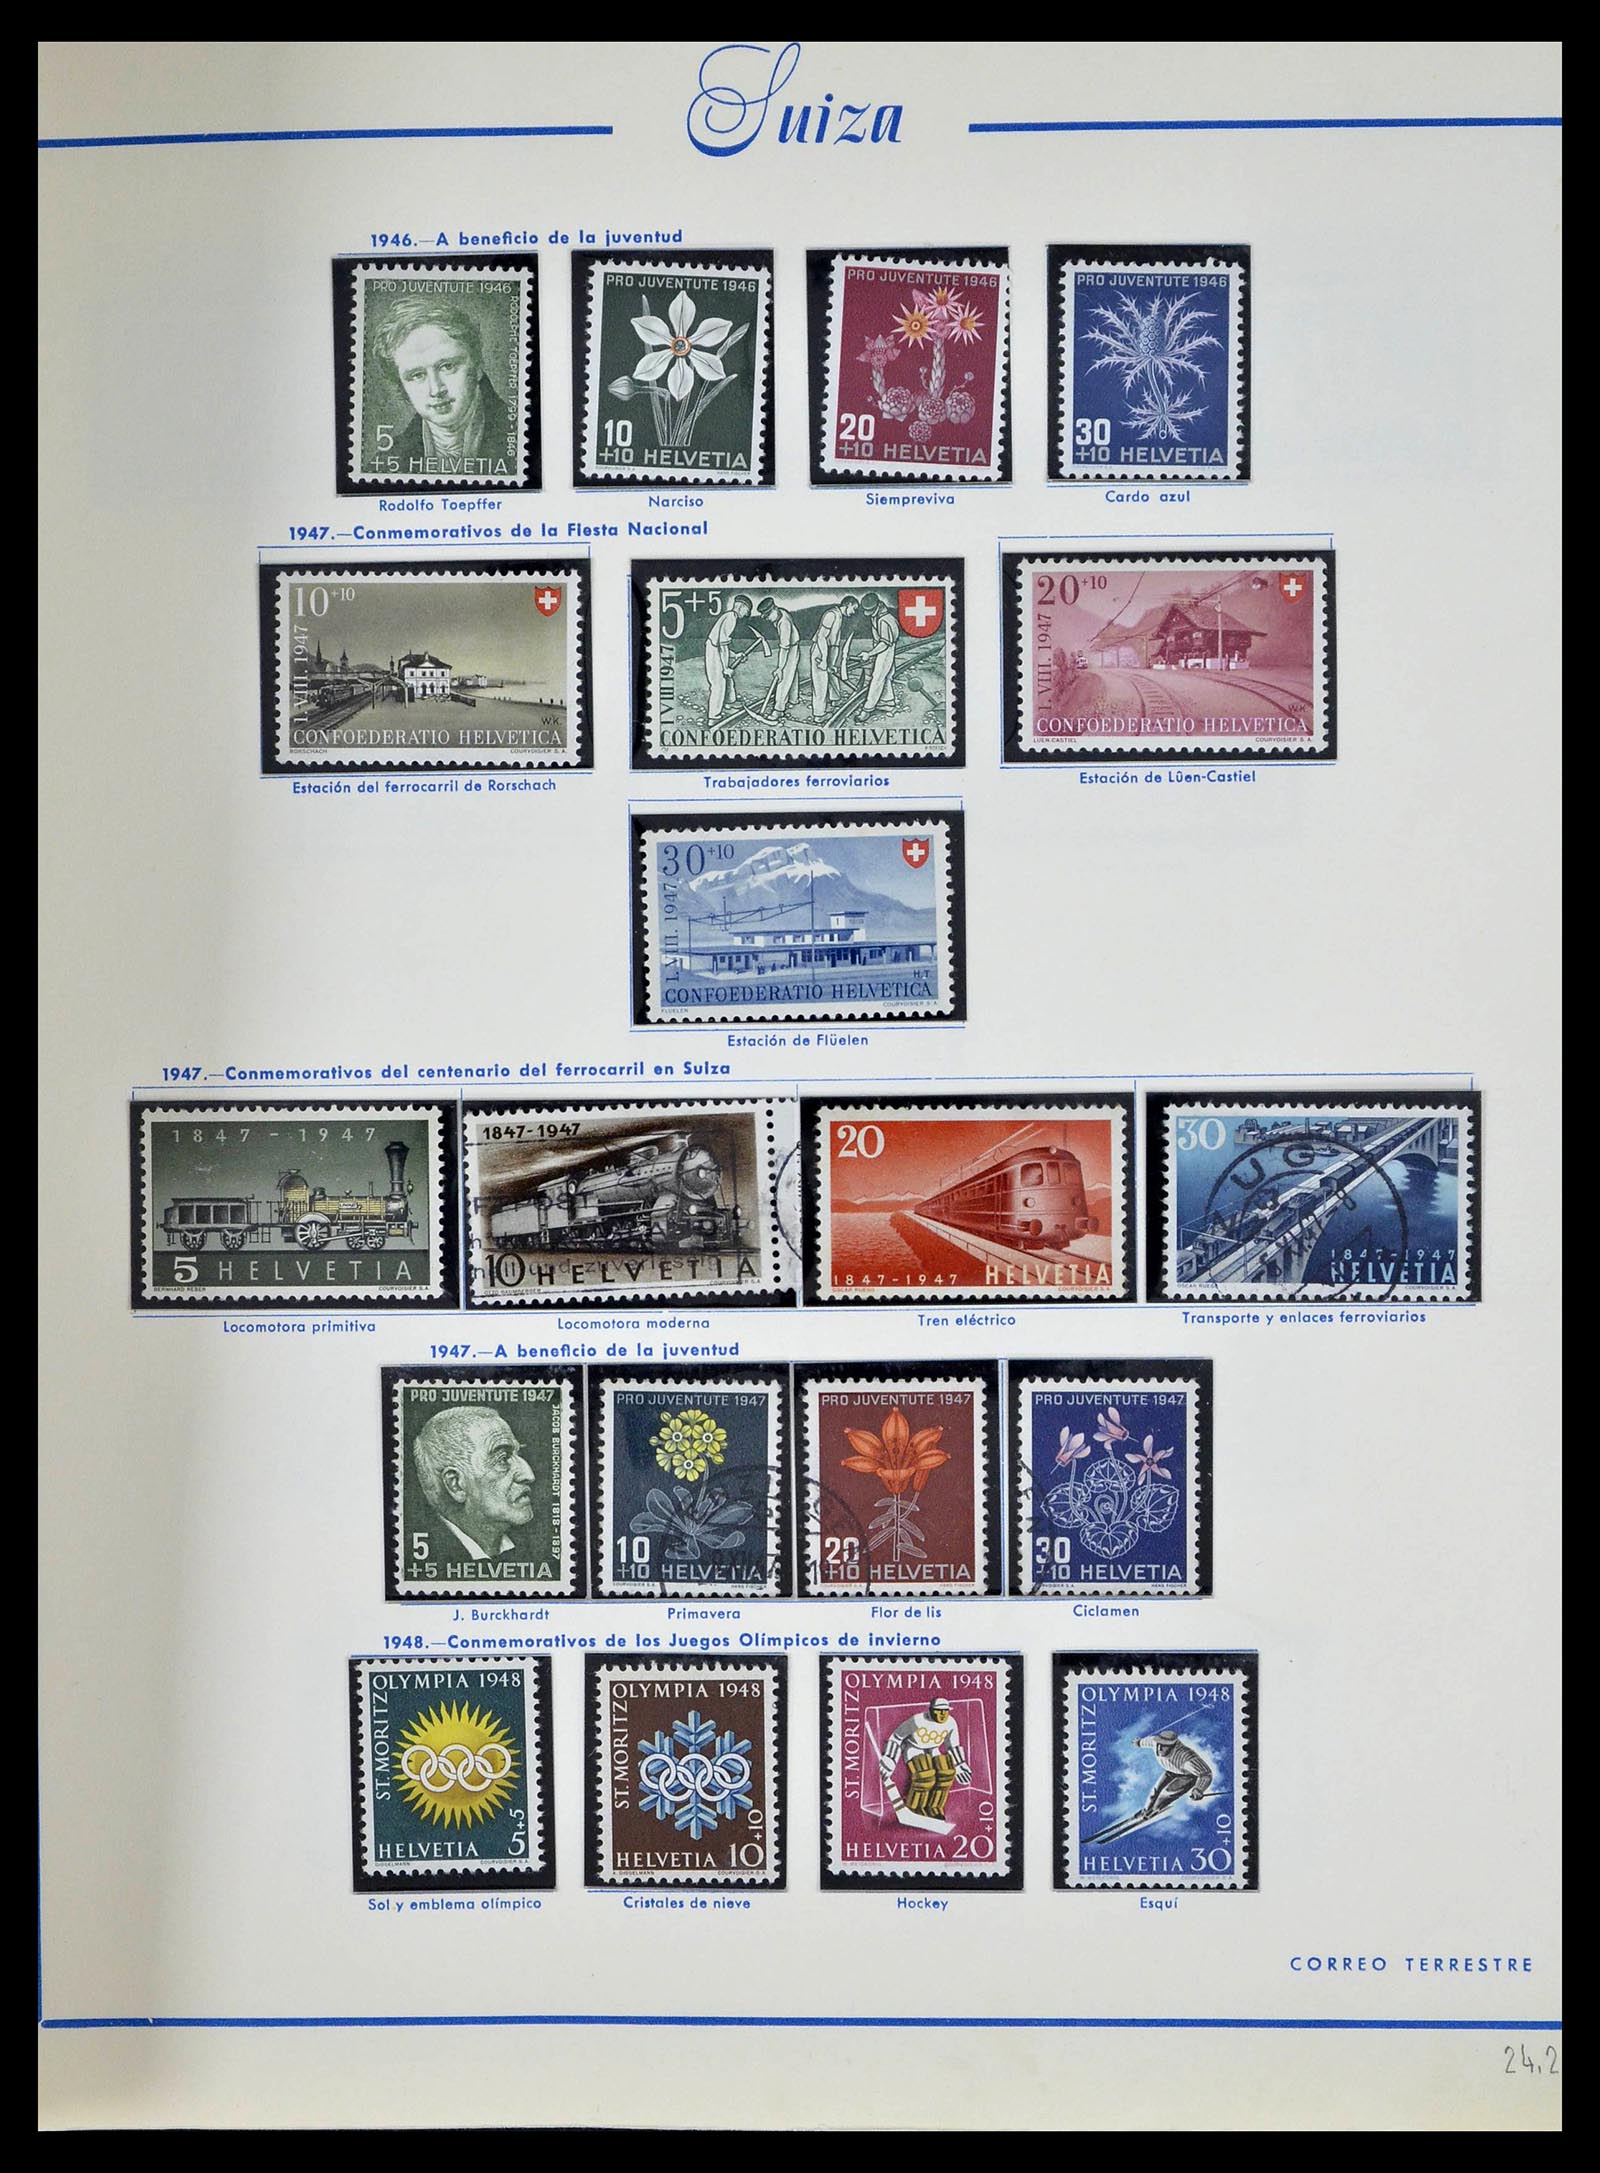 39217 0026 - Stamp collection 39217 Switzerland 1850-1986.